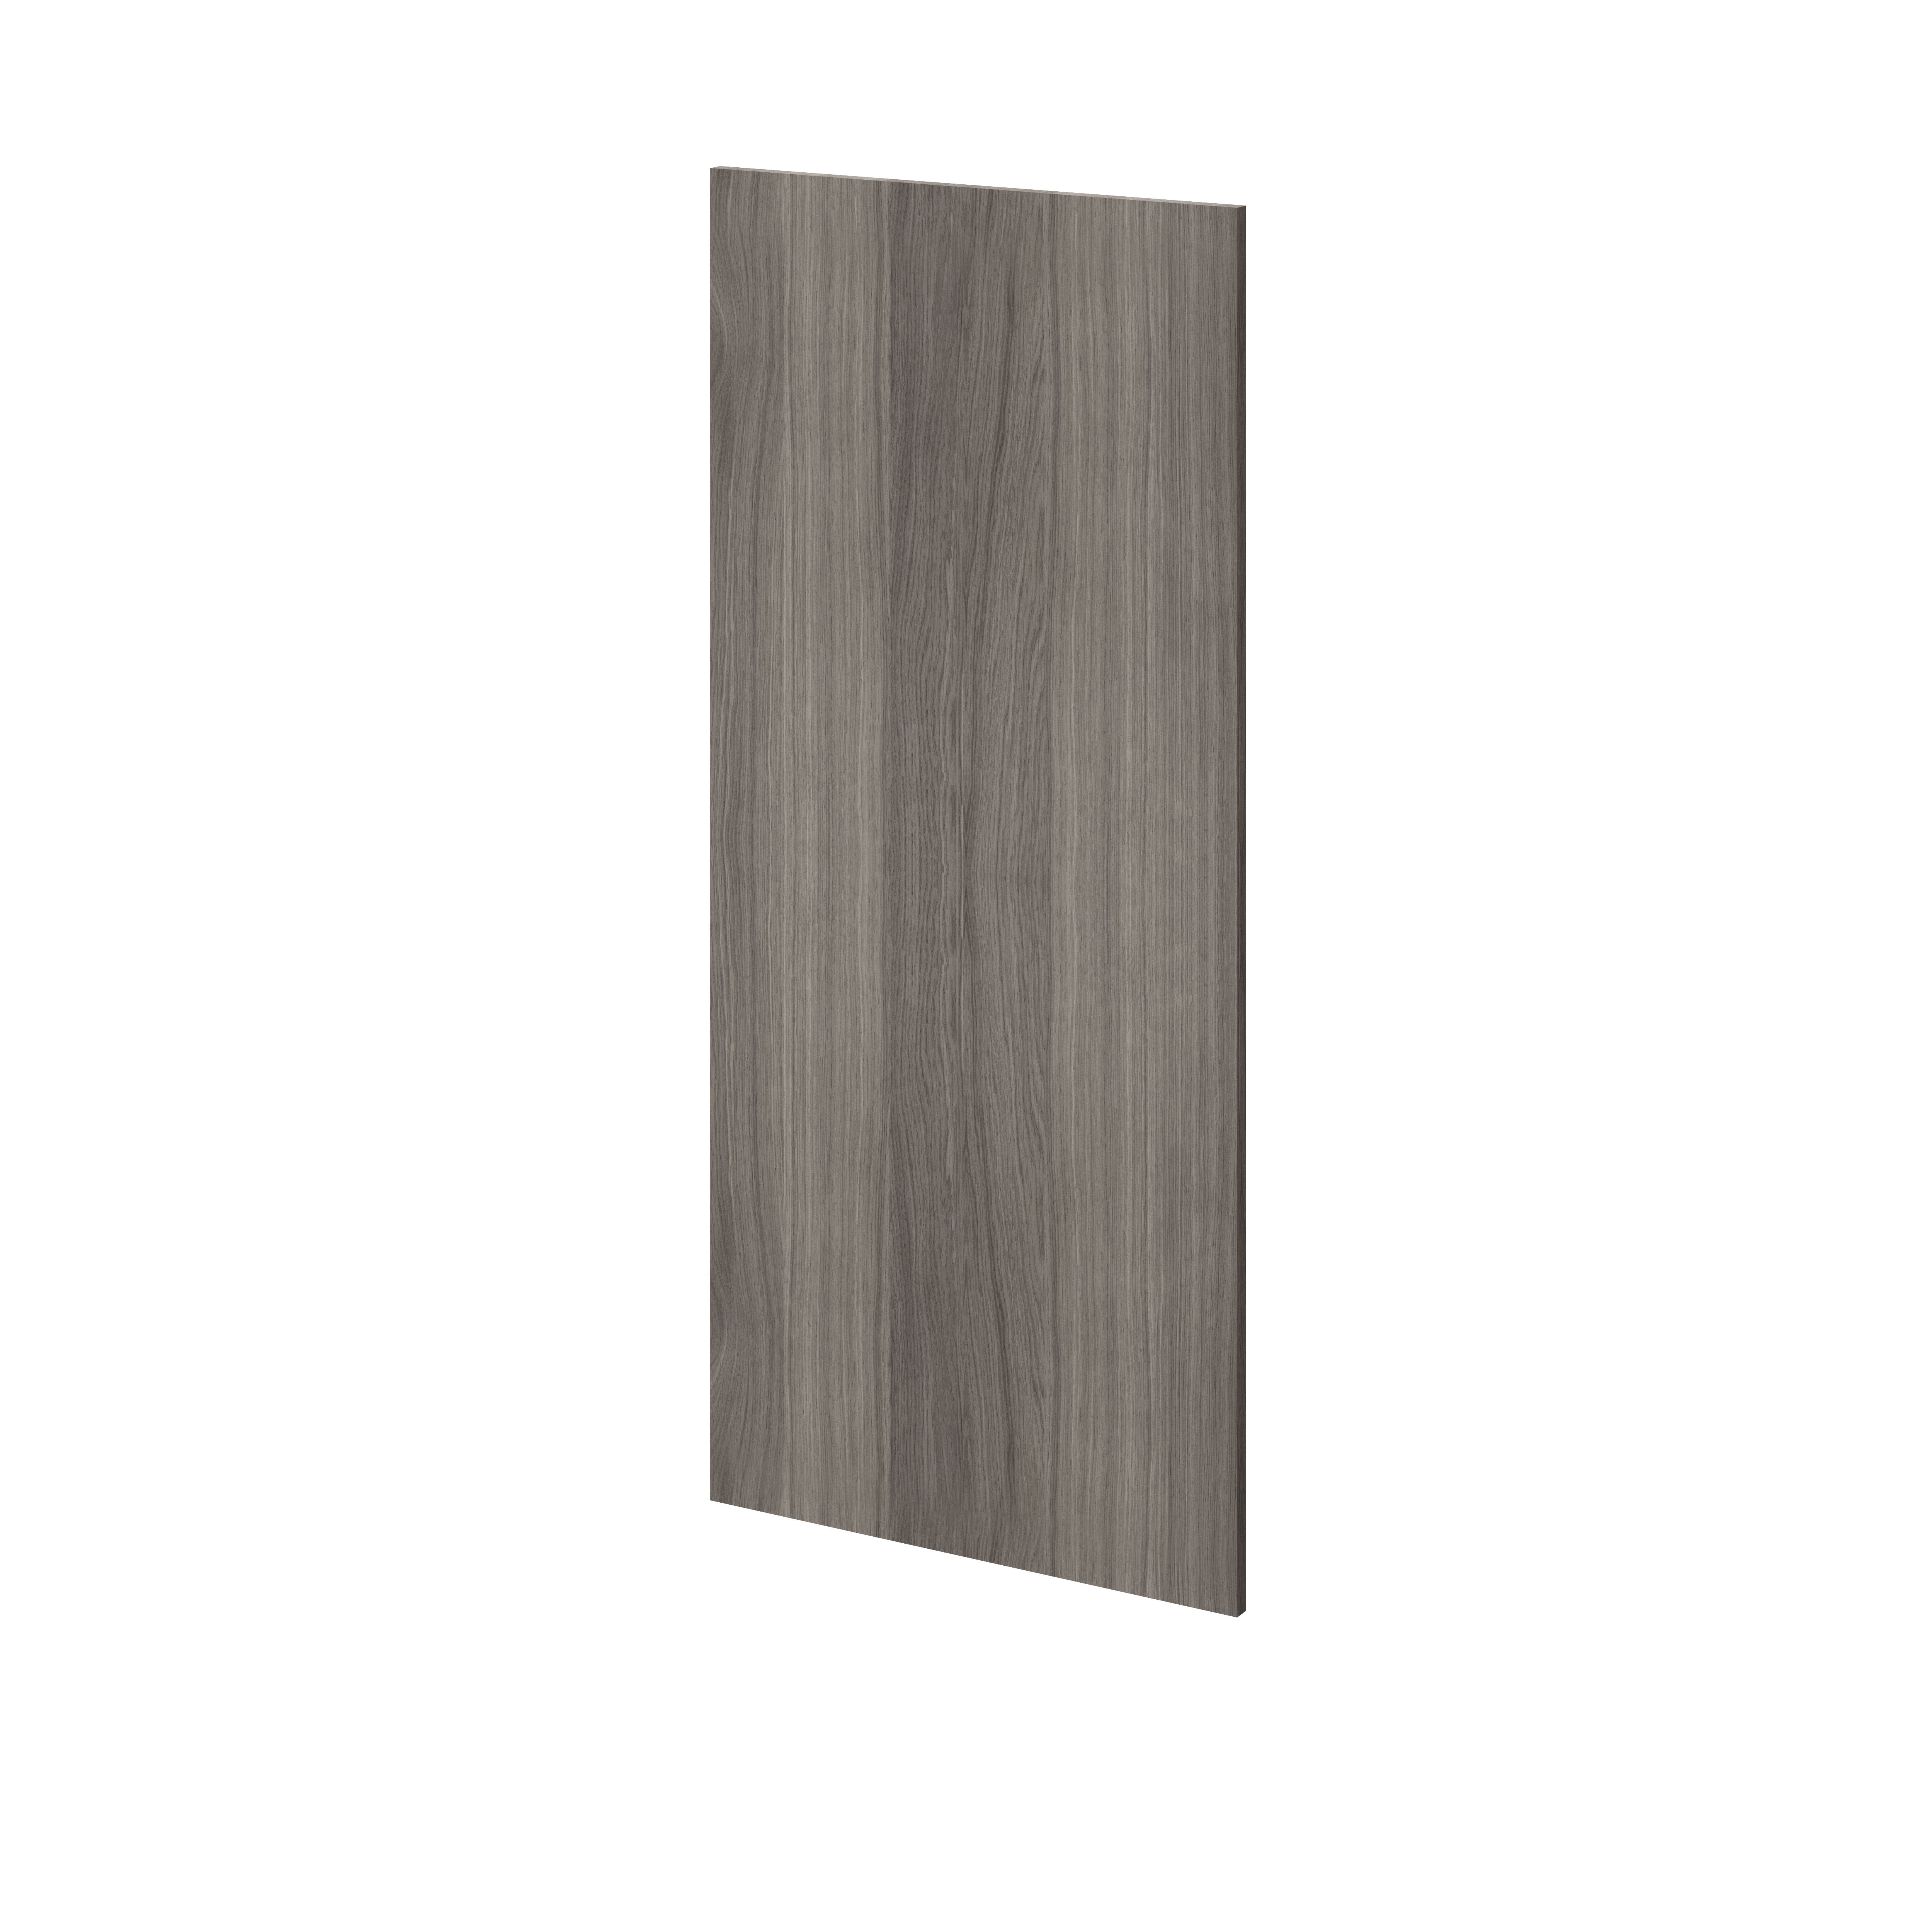 GoodHome Atomia Matt Grey oak effect Non-mirrored Modular furniture door, (H) 1122mm (W) 497mm